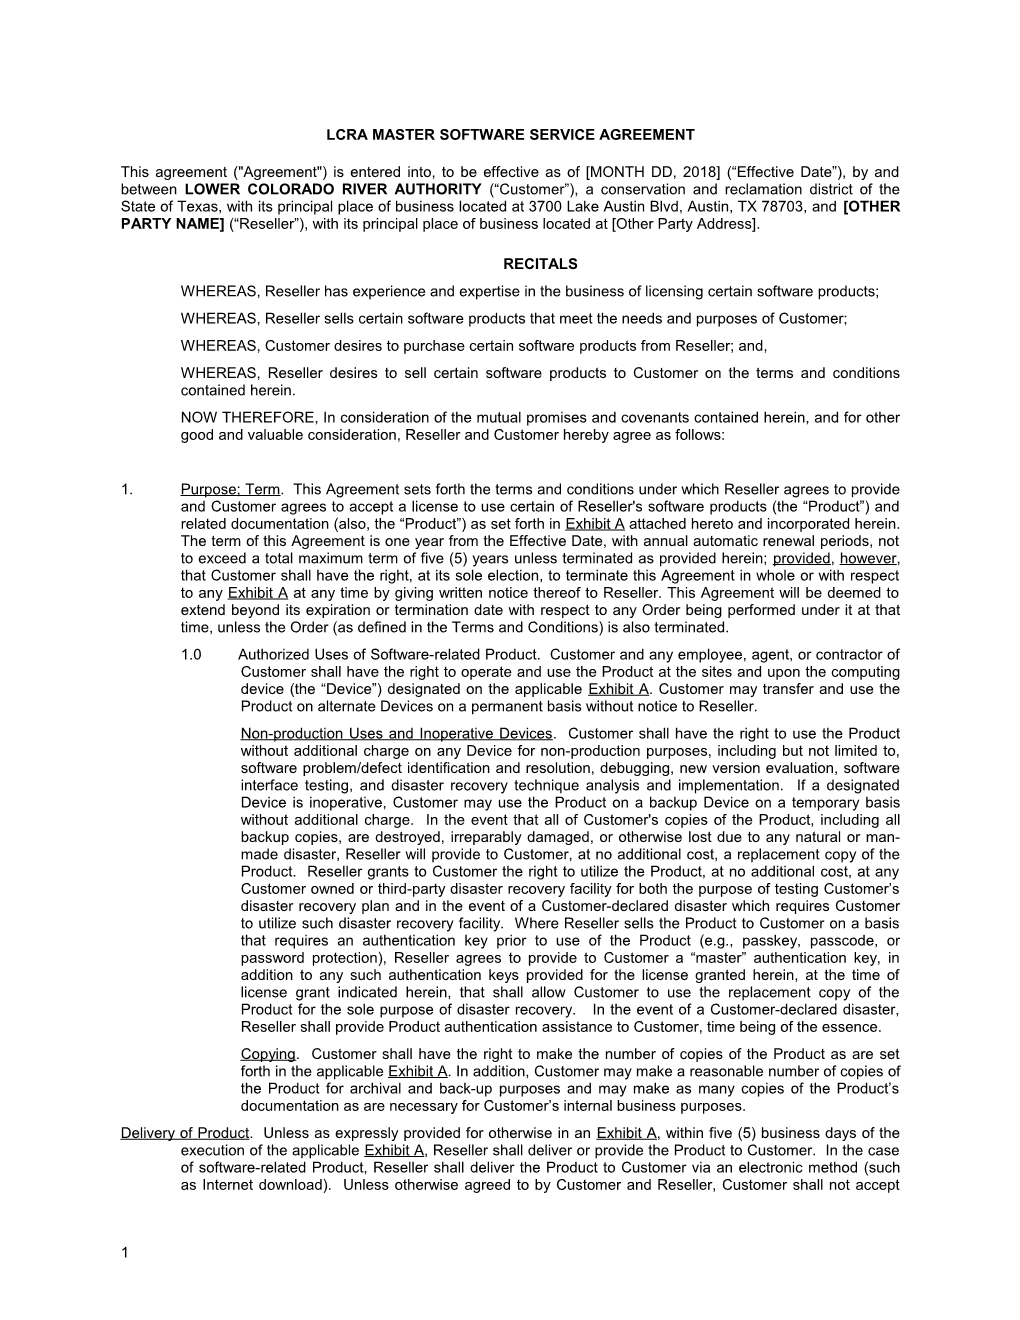 RFP 11018 - Software Service Agreement